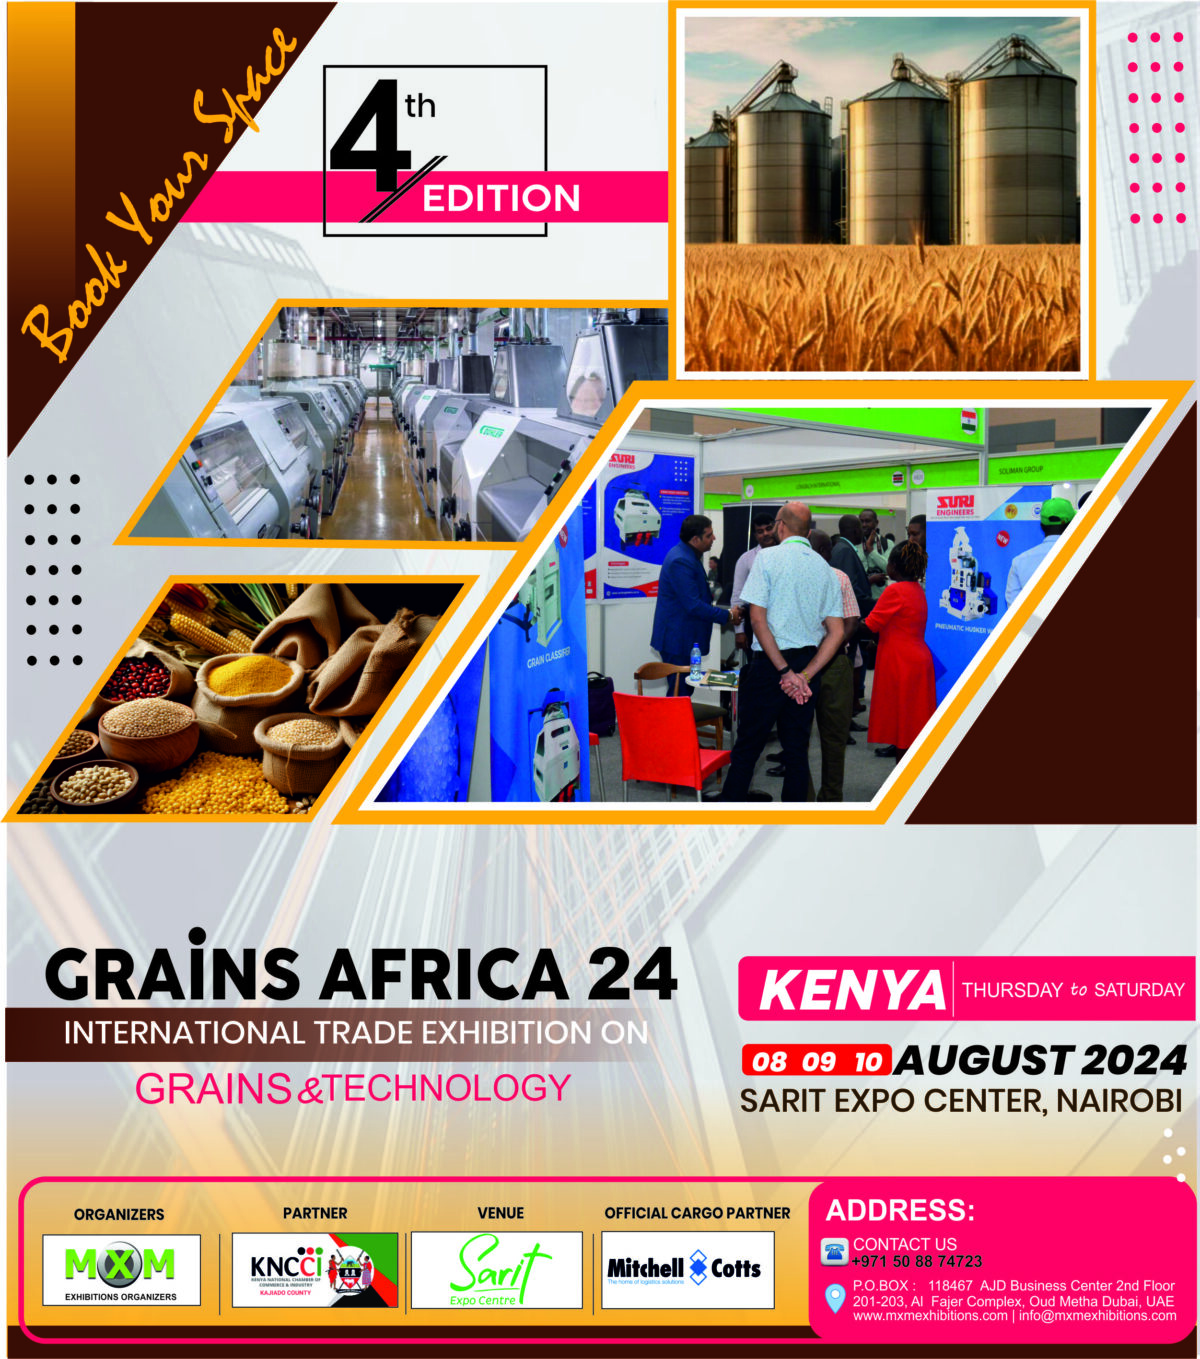 grains-kenya-ad-2024-1-1200x1359.jpg